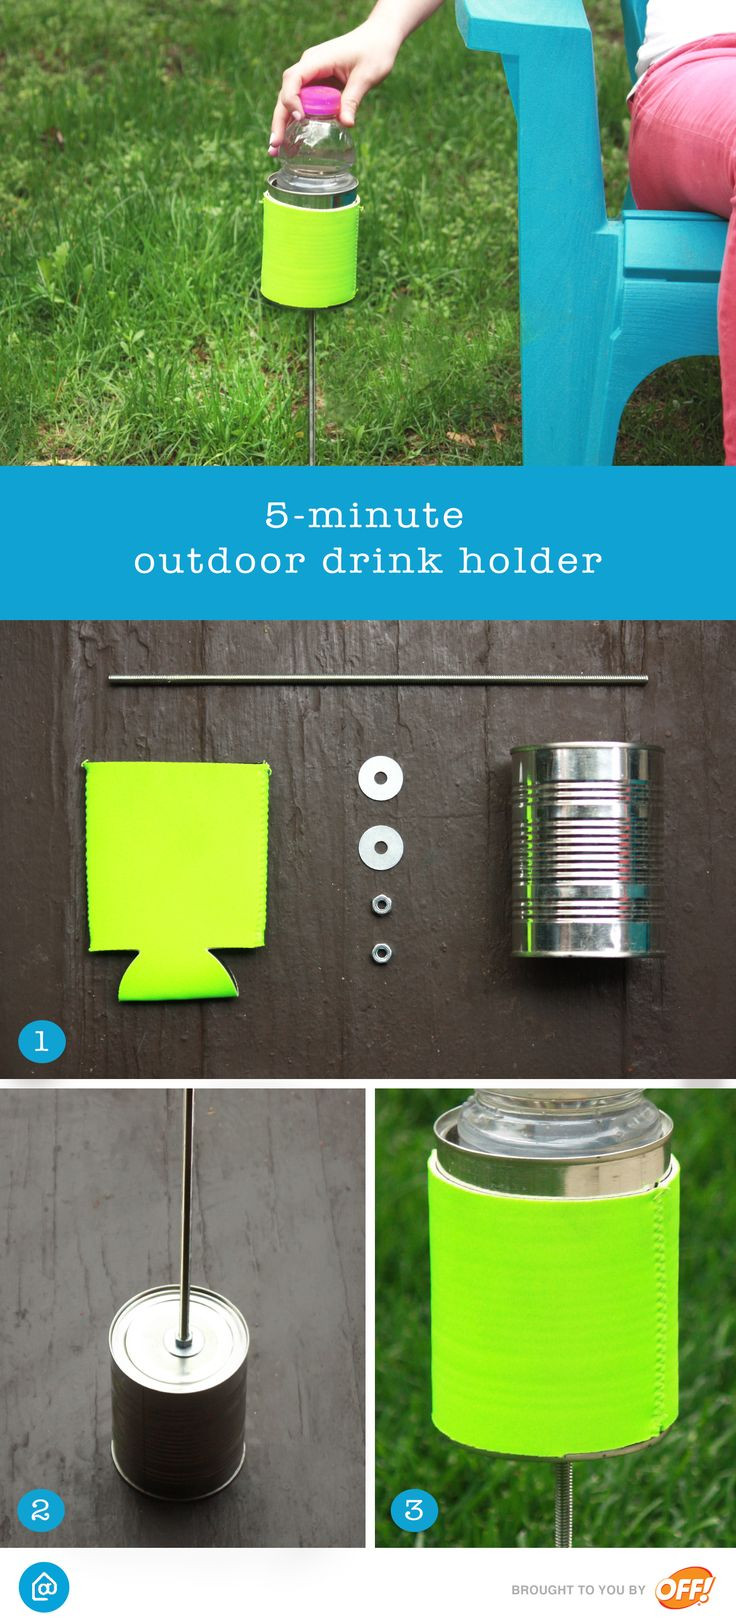 Outdoor Drink Holders DIY
 Best 25 Drink holder ideas on Pinterest